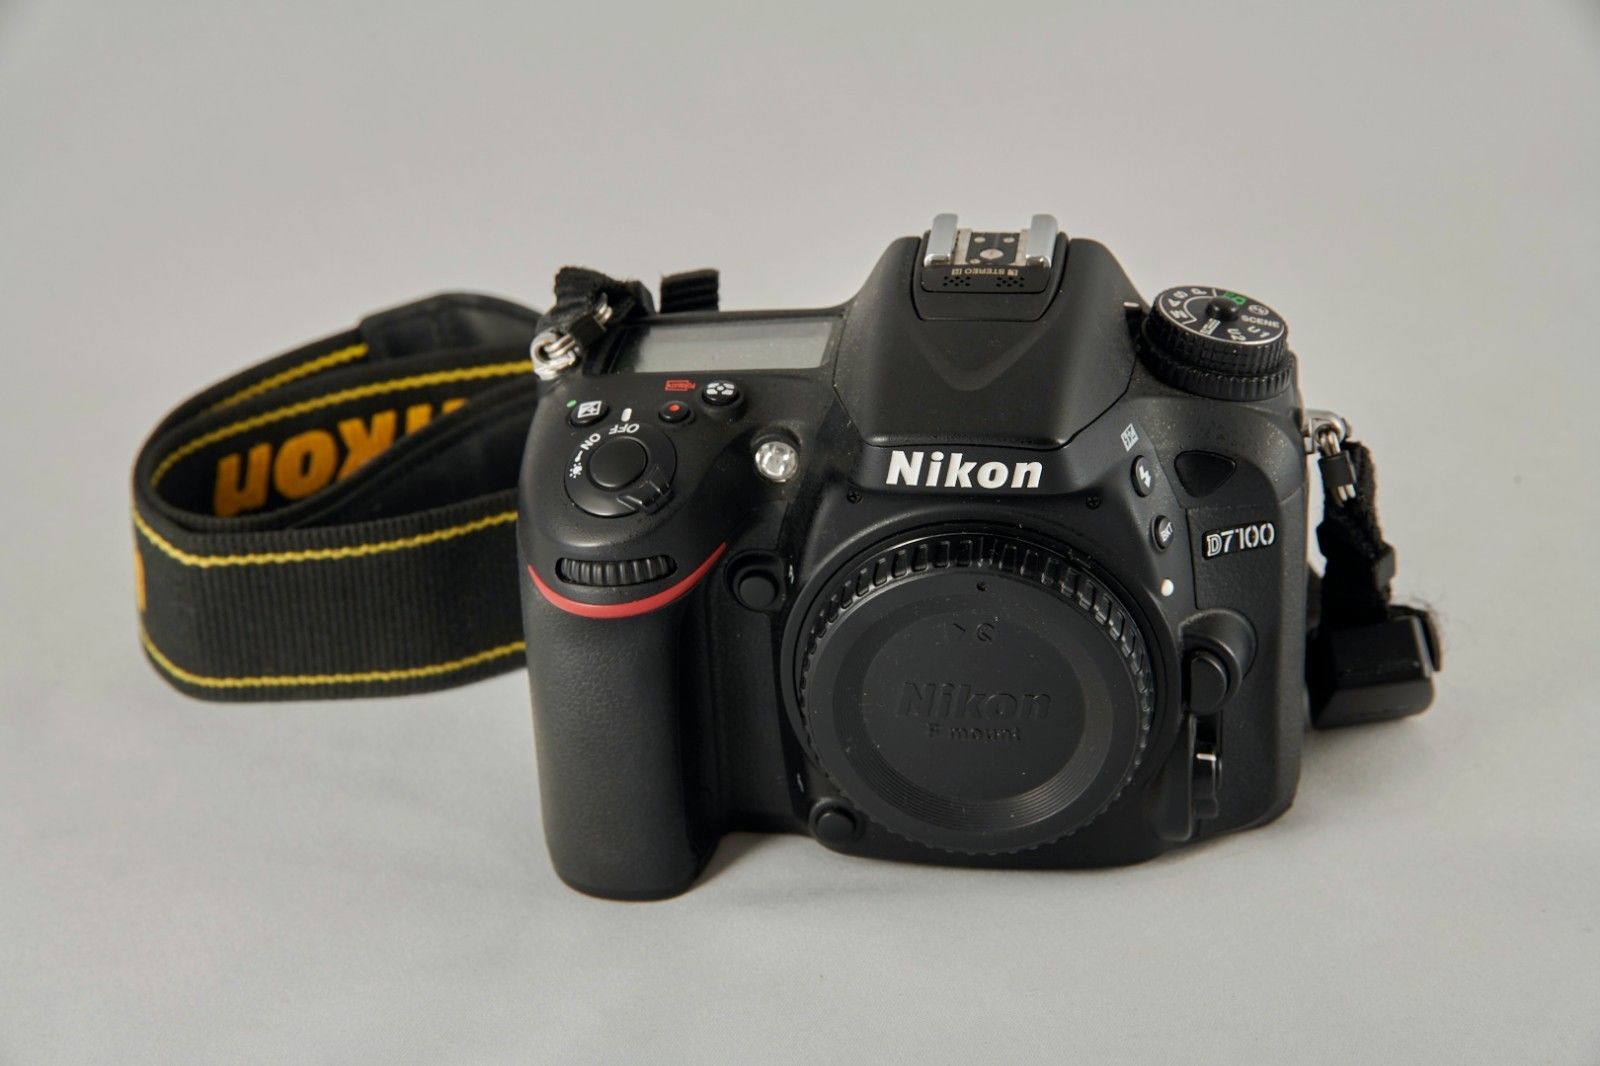 Nikon D7100 24.1 MP SLR-Digitalkamera  mit WLAN Wu-1a und Lederhülle TOP!